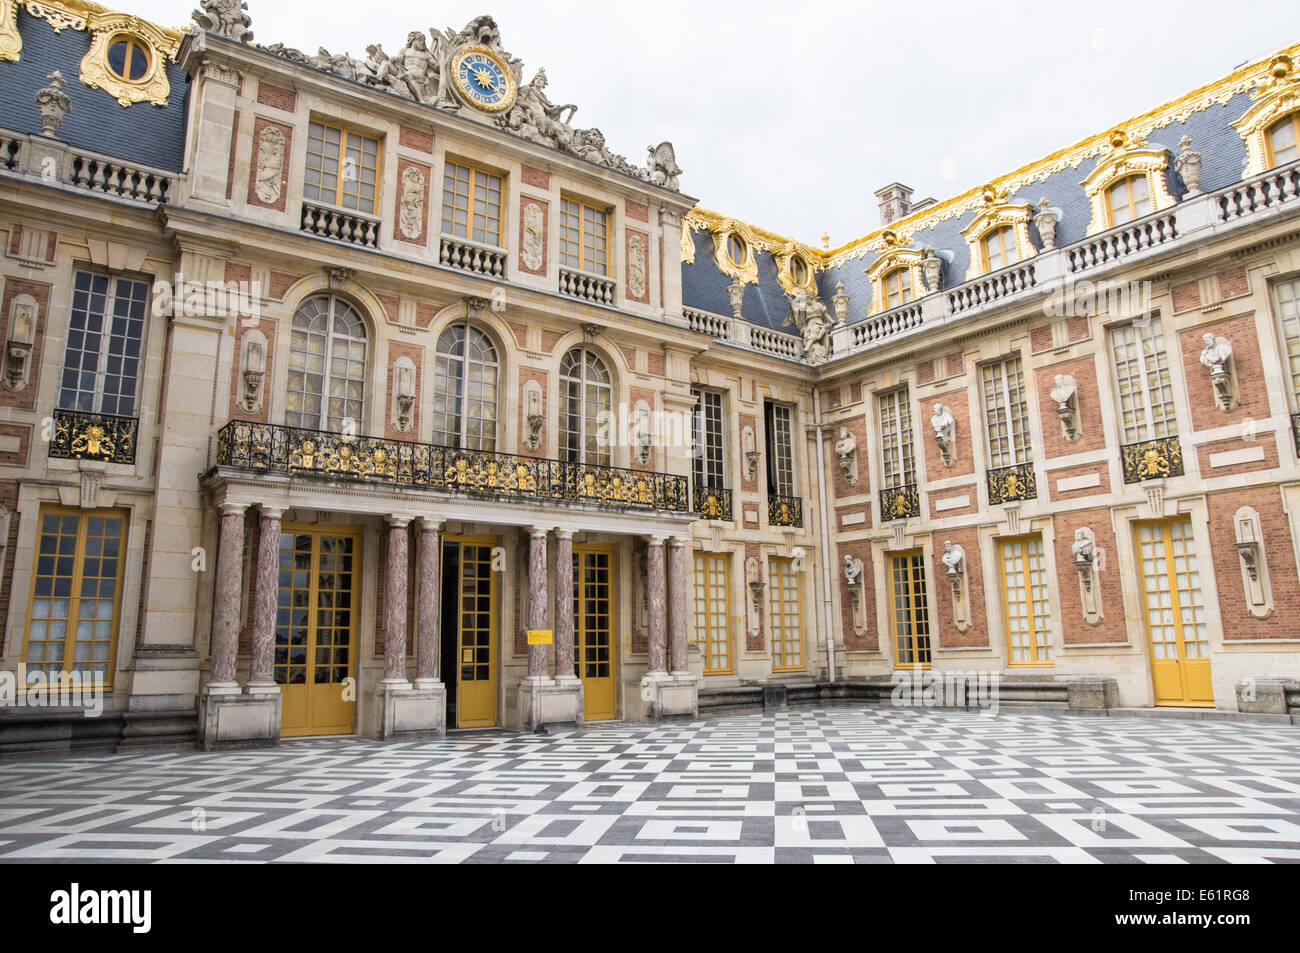 Façade baroque du château de Versailles Château de Versailles [ ] en France Banque D'Images